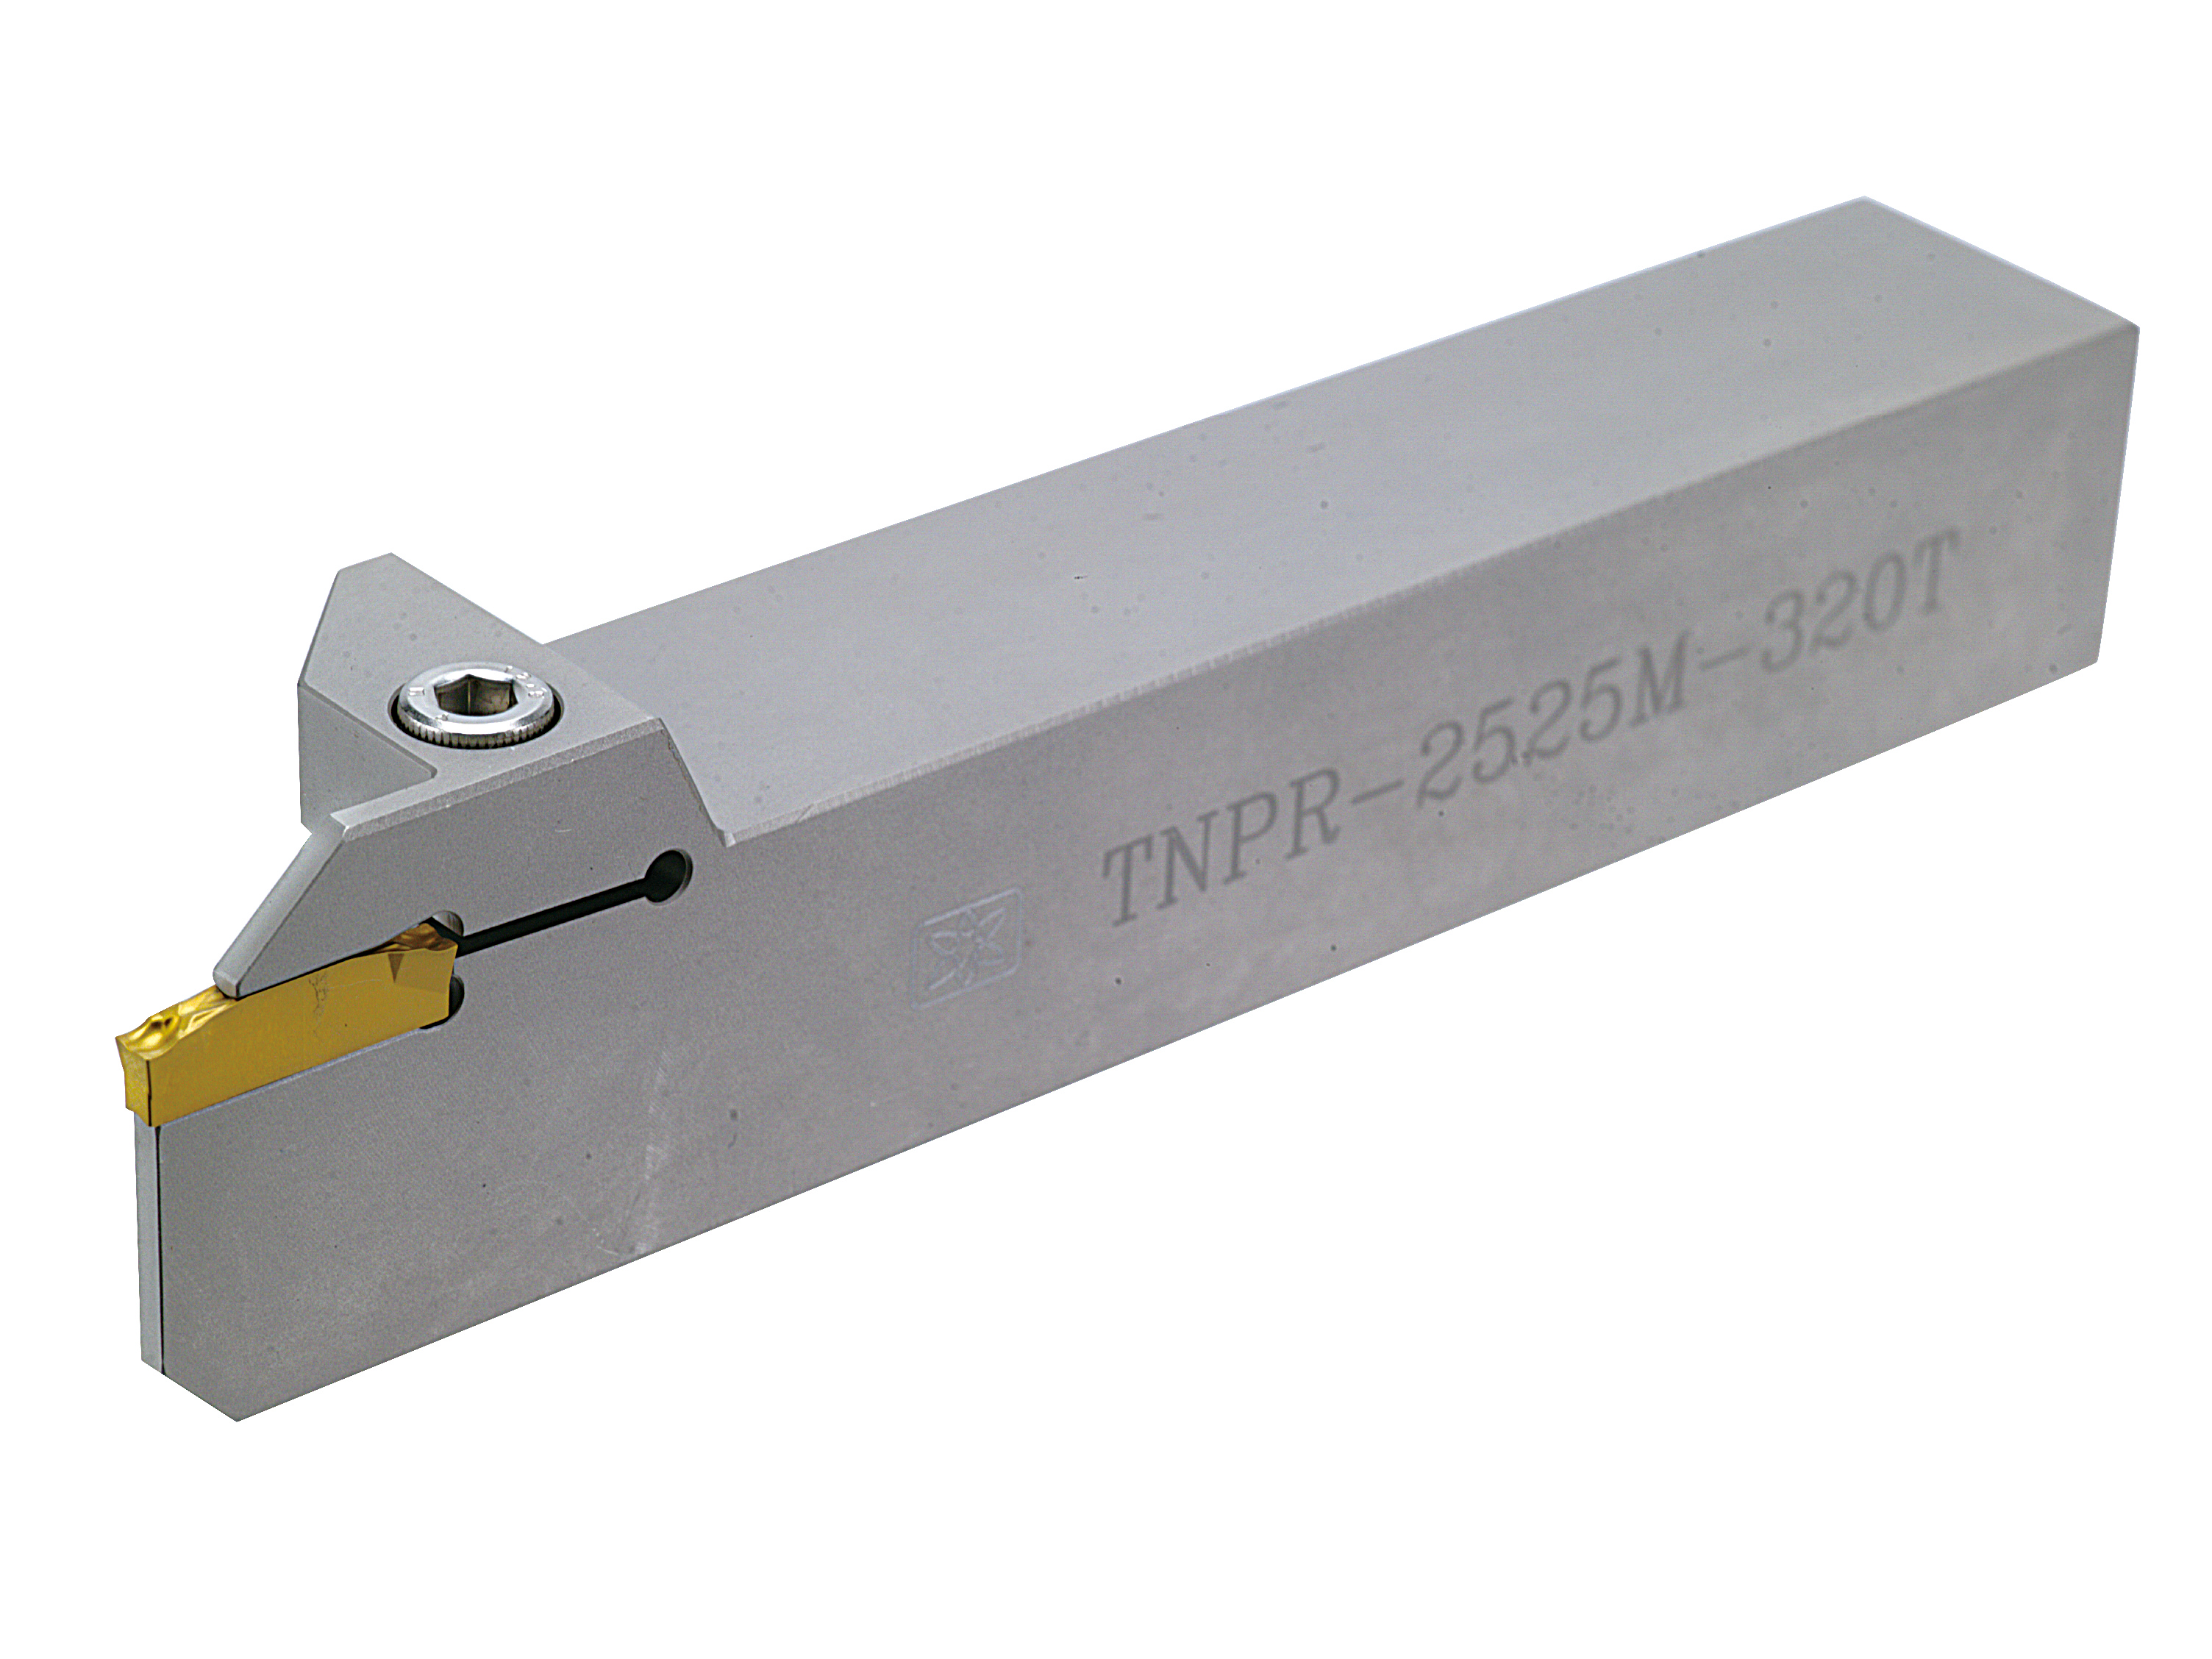 Products|TNPR (TN300...) External Groovin Tool Holder